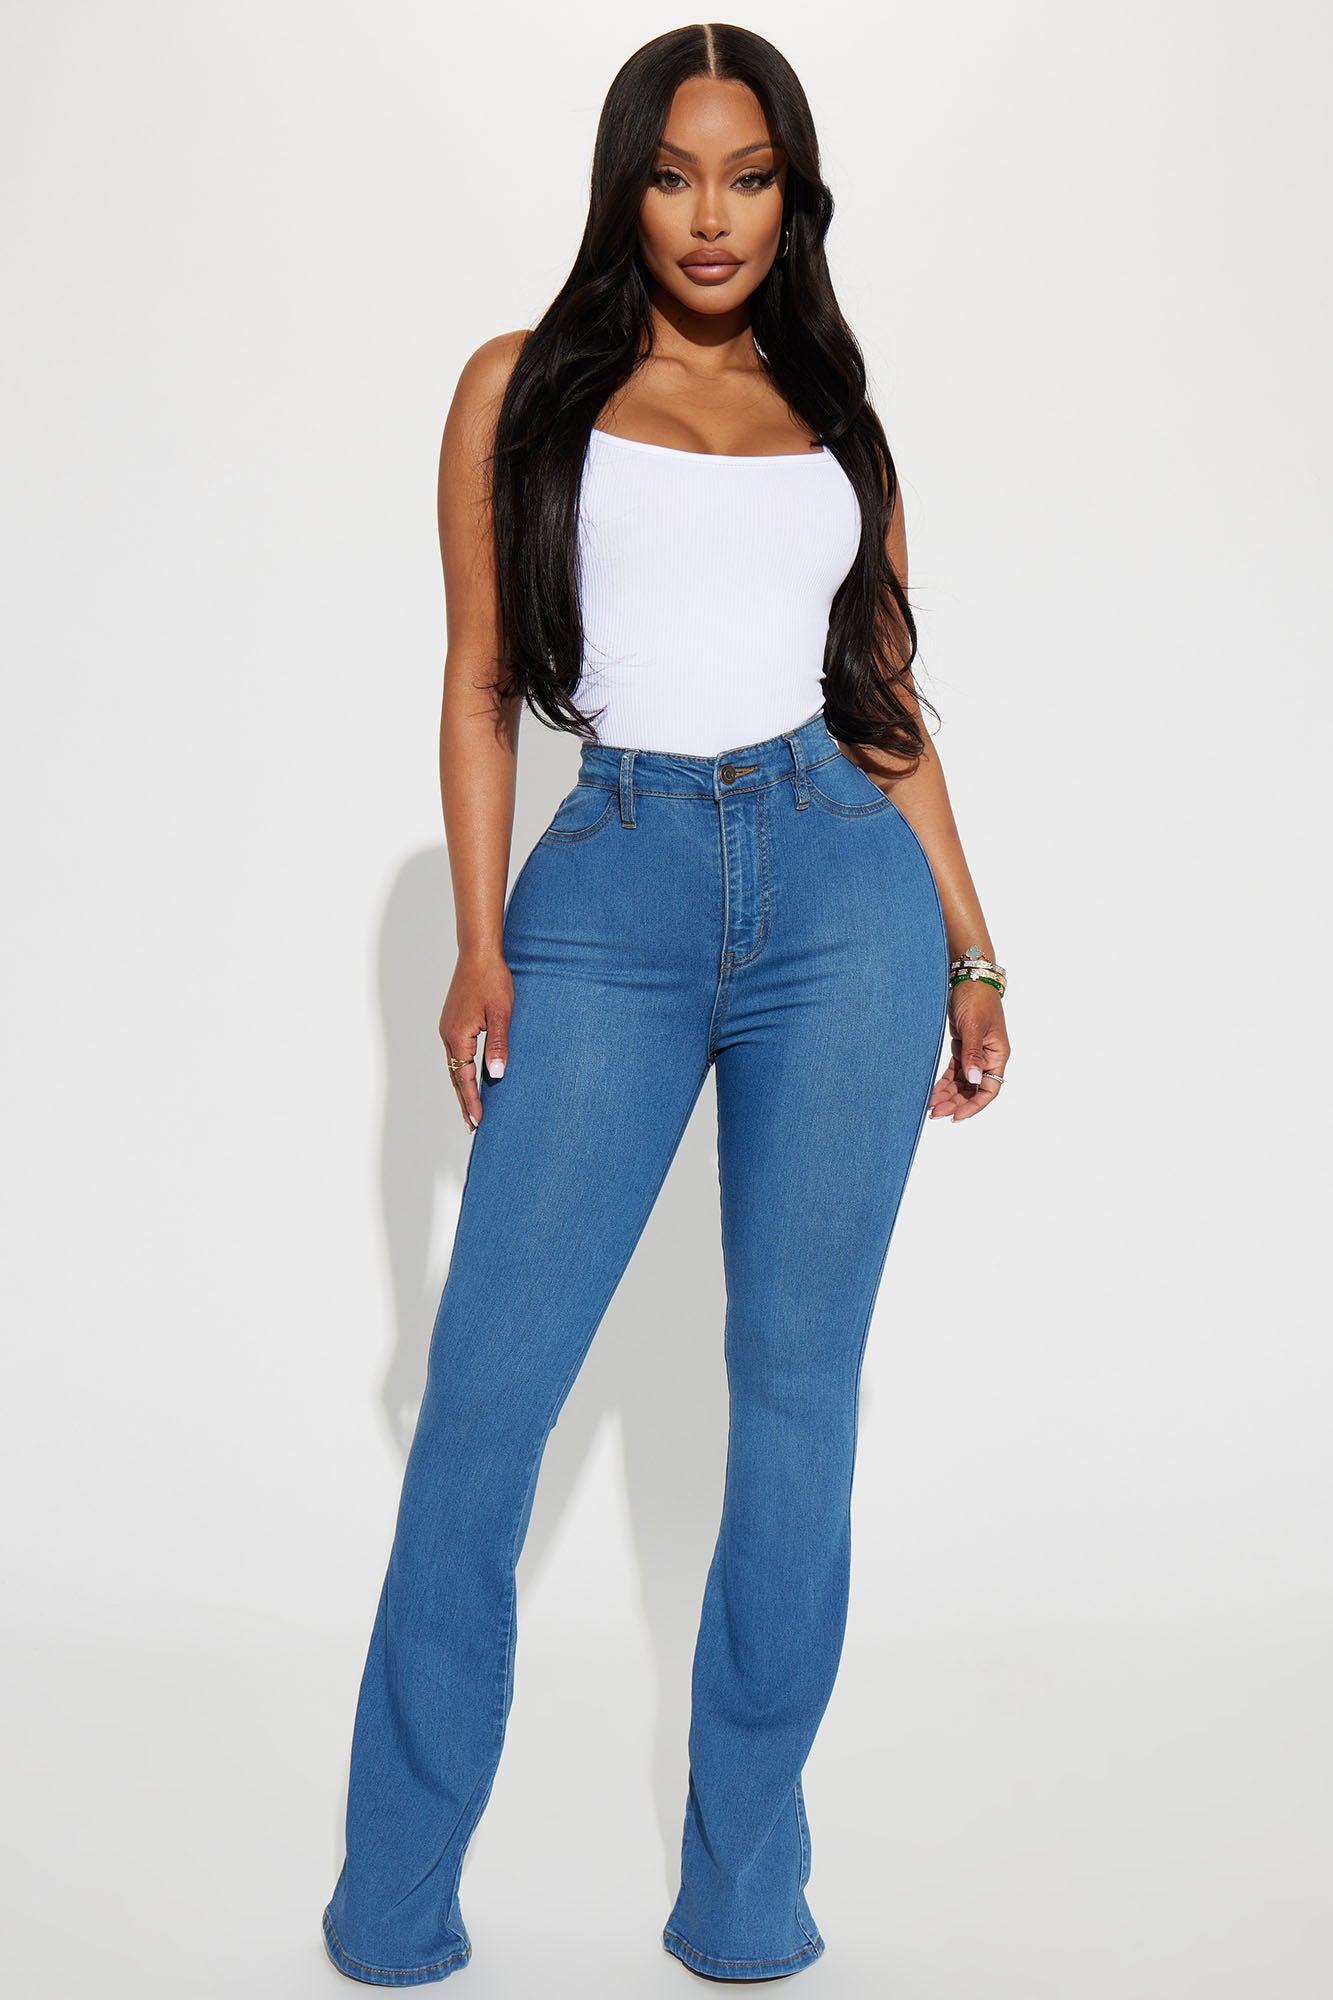 Plus Size Super Flared Jeans  Super flare jeans, Plus size outfits, Flare  jeans outfit plus size